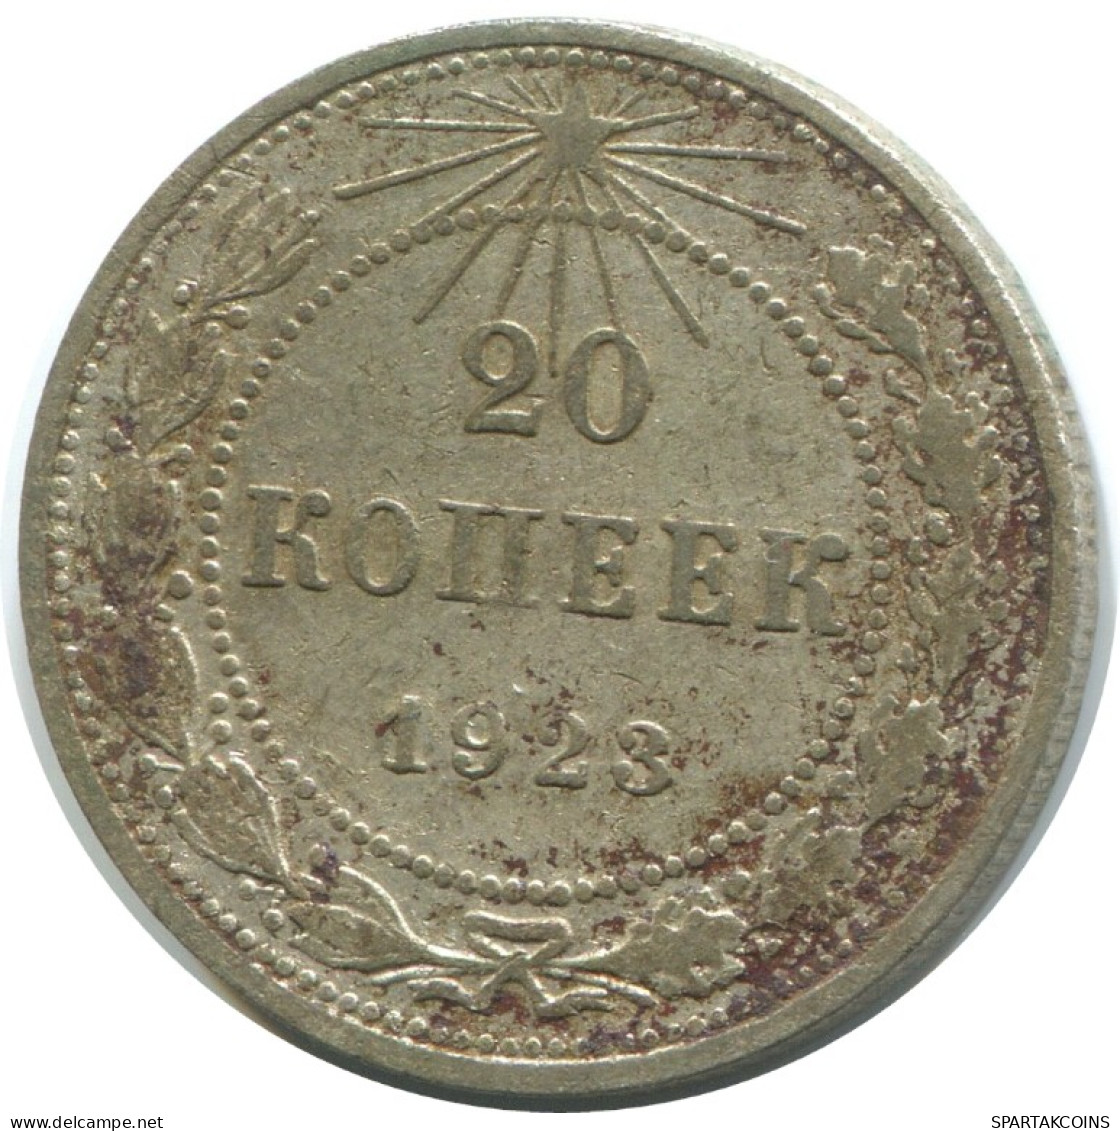 20 KOPEKS 1923 RUSSIA RSFSR SILVER Coin HIGH GRADE #AF526.4.U.A - Russie